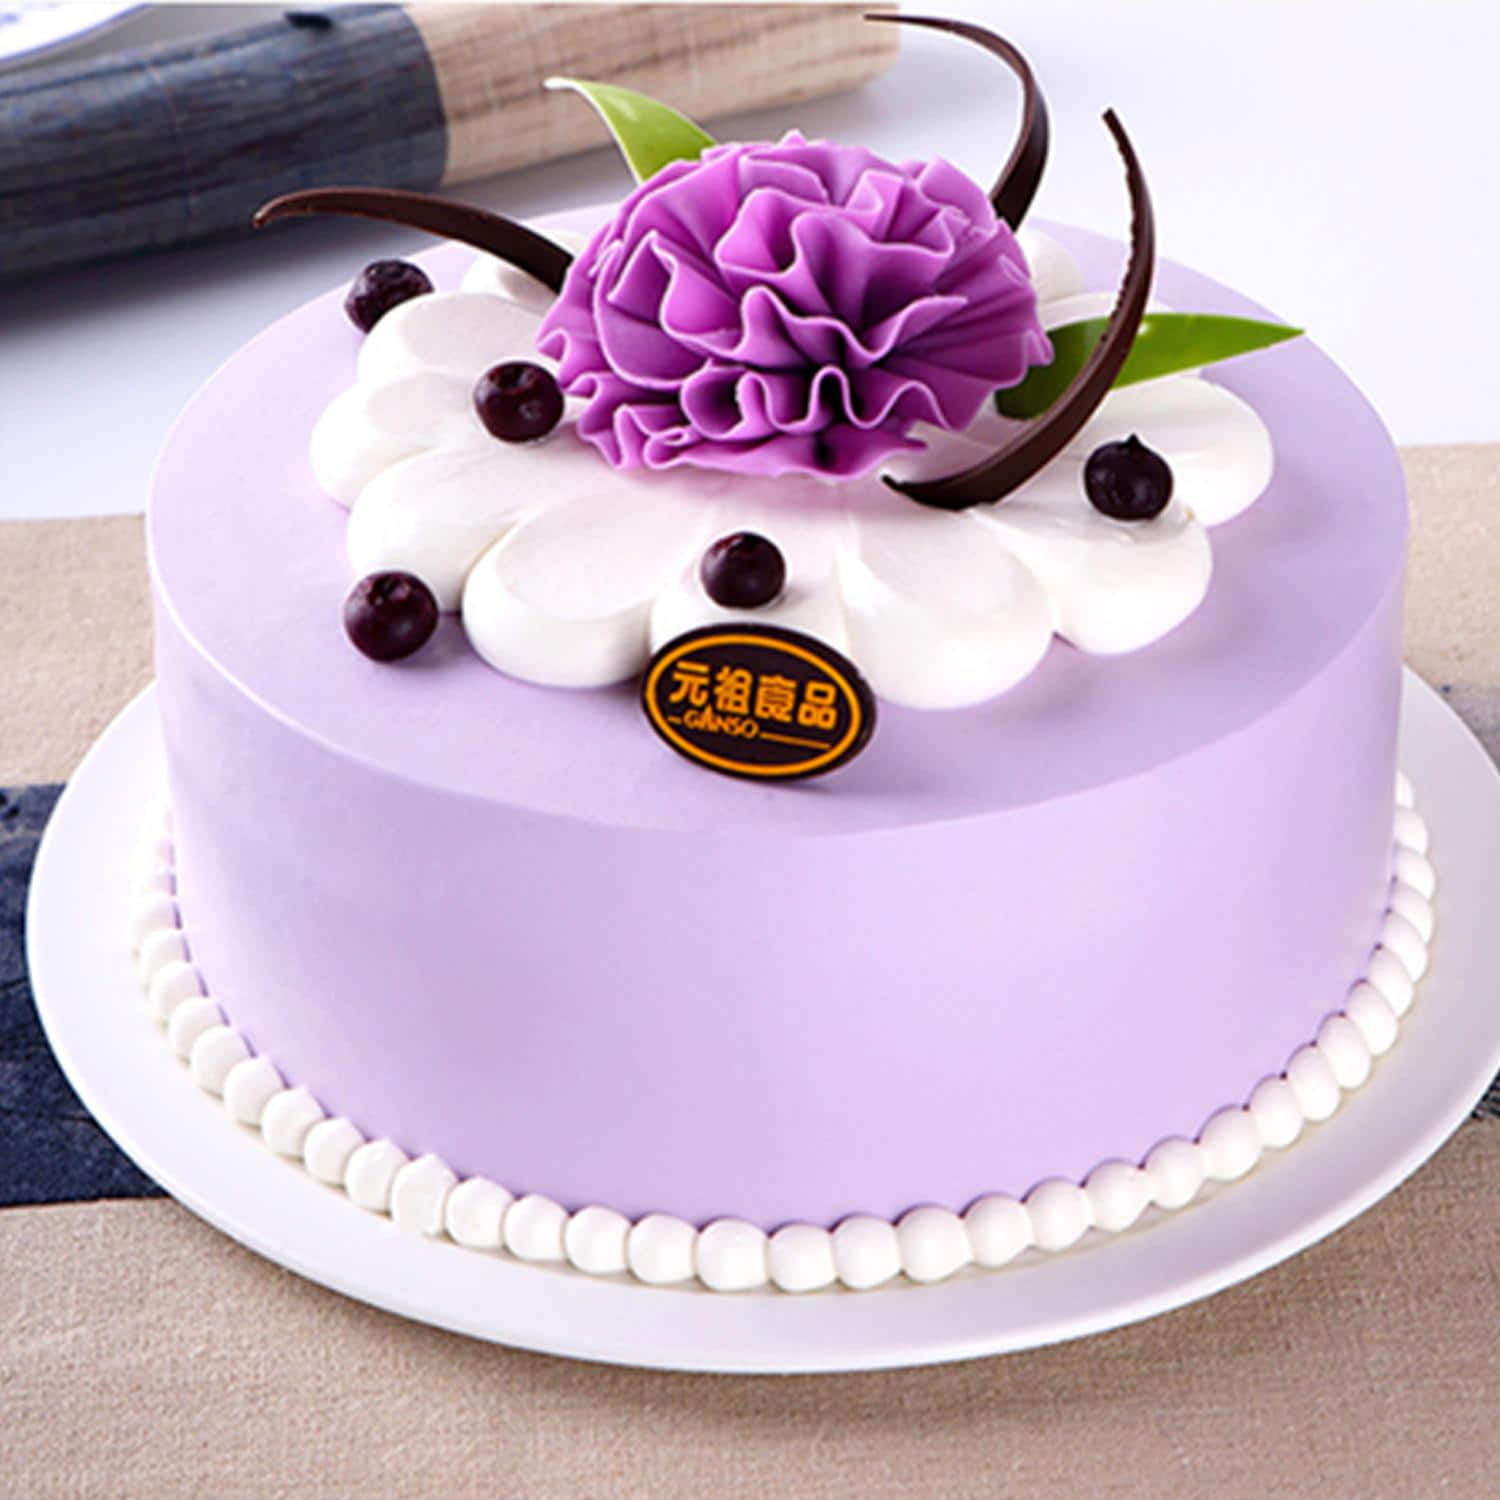 Order Lavender Bliss Cake Half Kg Online at Best Price, Free Delivery|IGP  Cakes